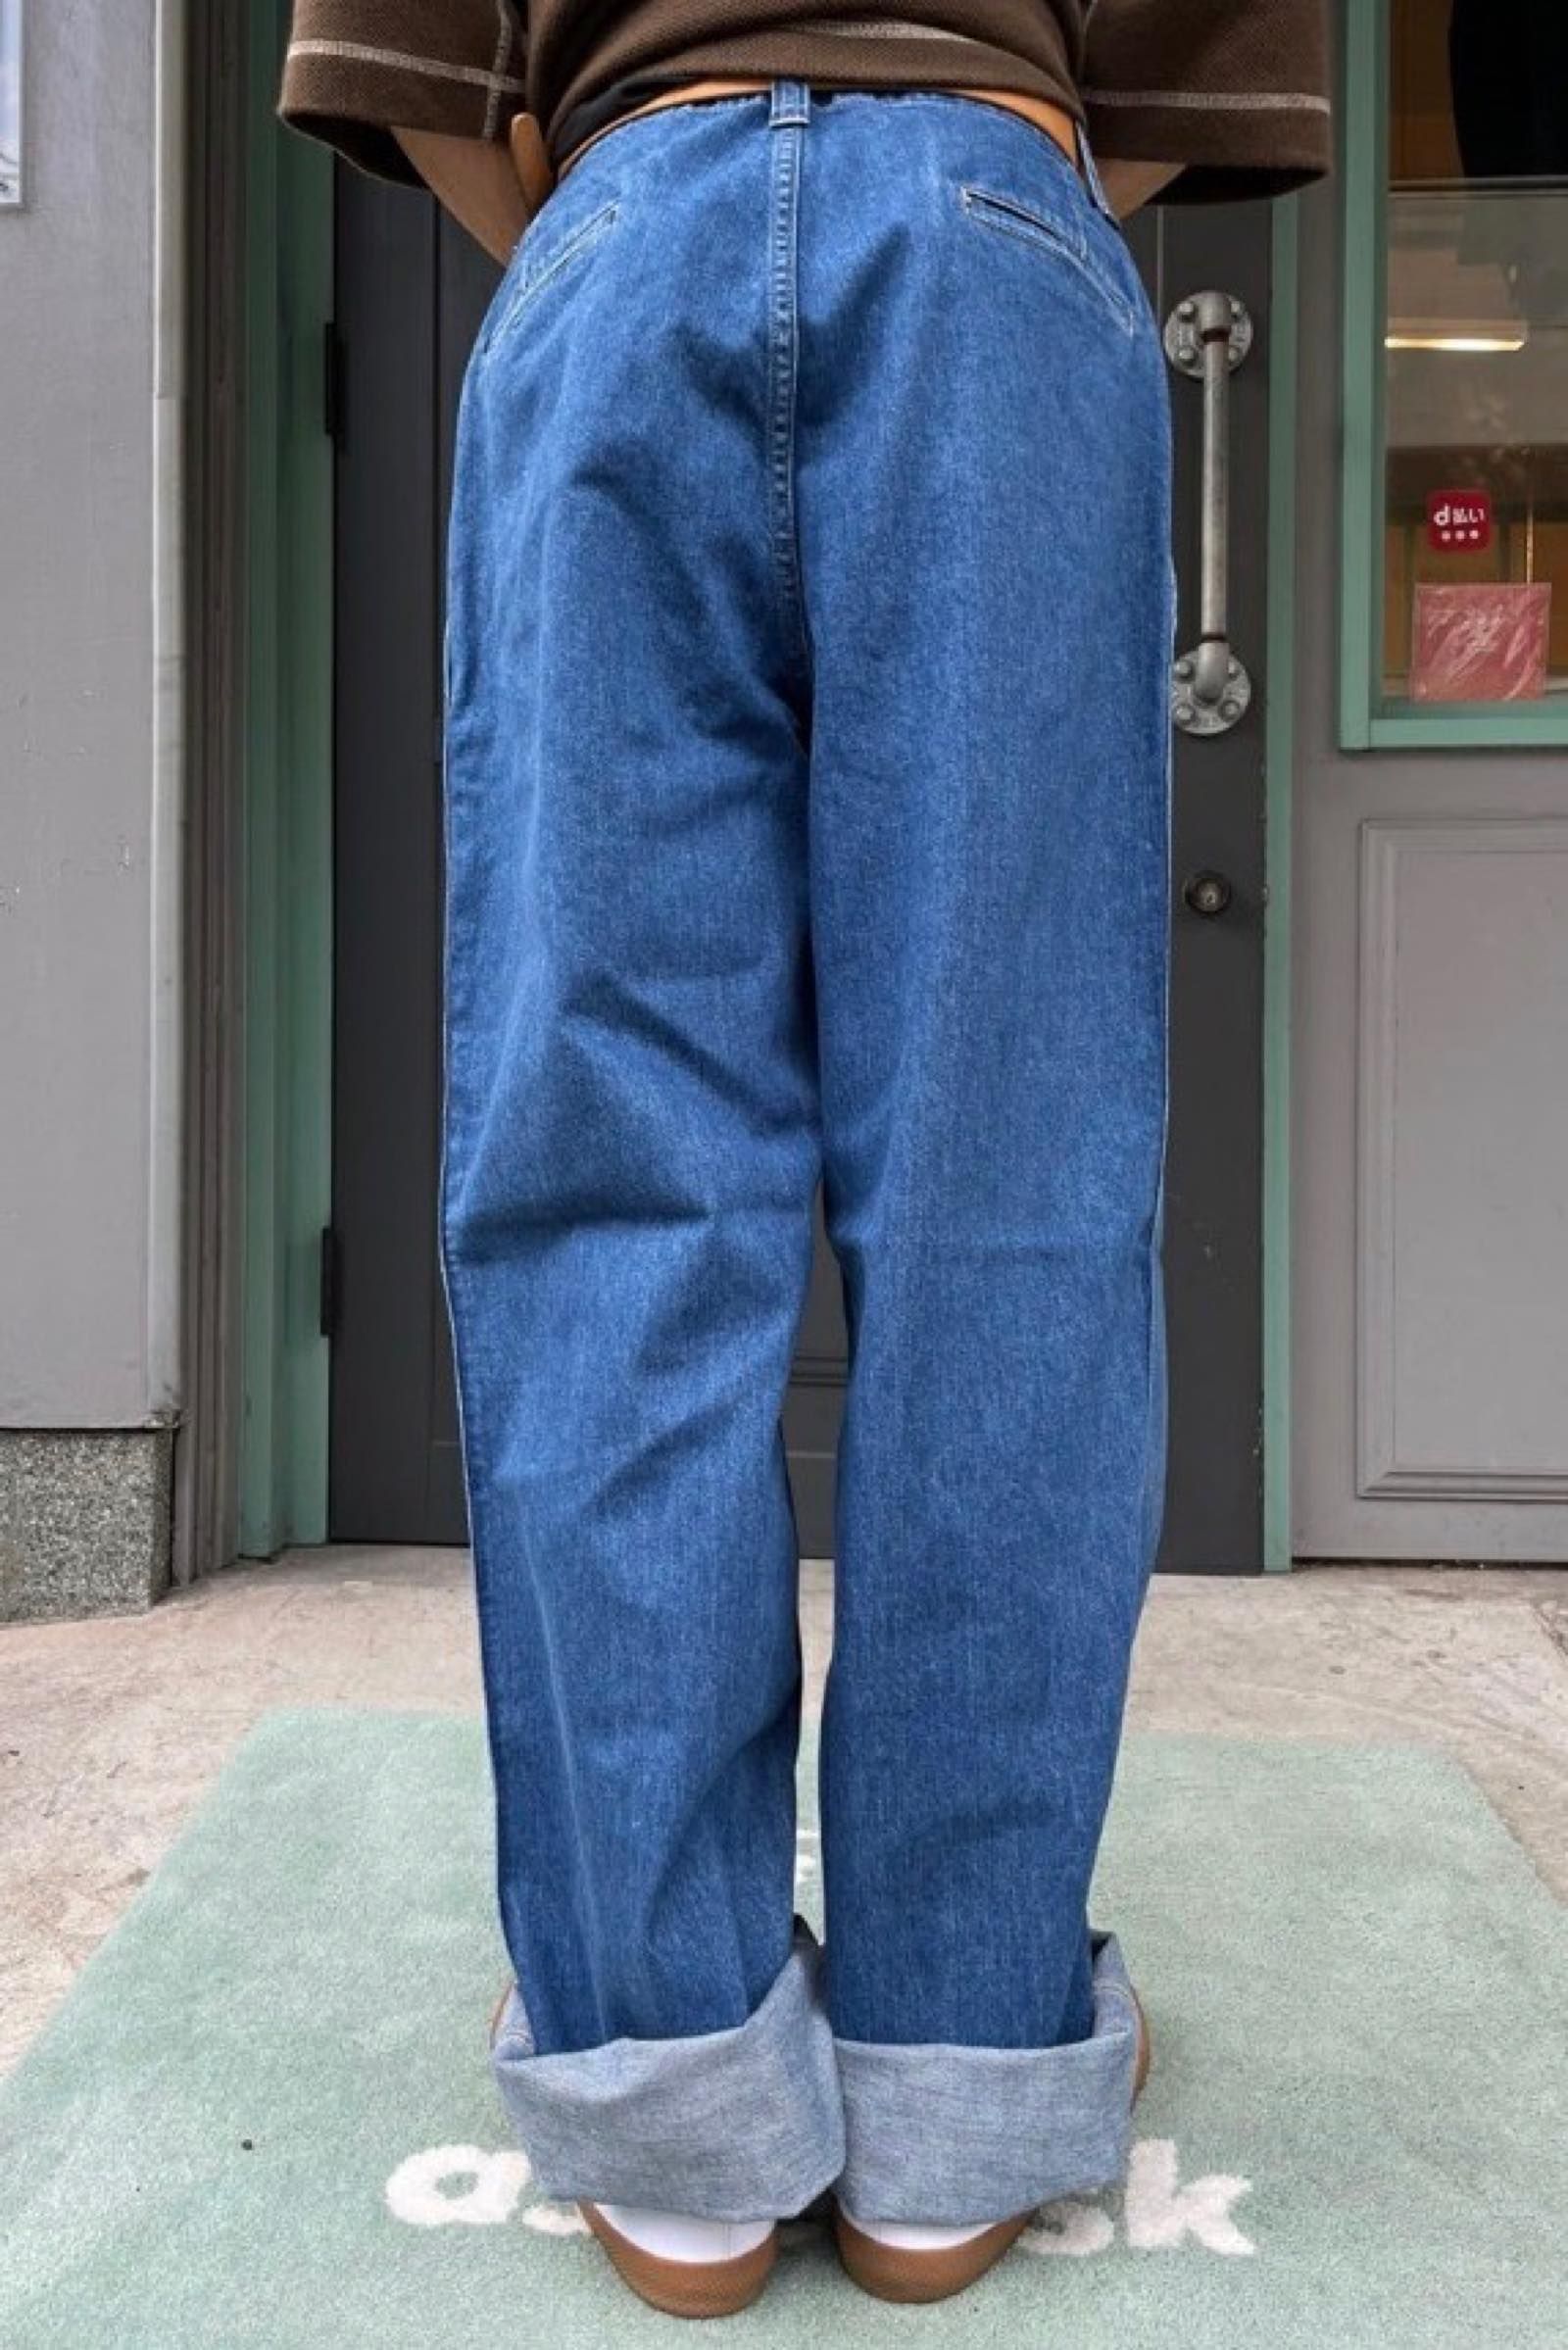 E.TAUTZ - core field trousers denim vintage wash indigo 21aw ...